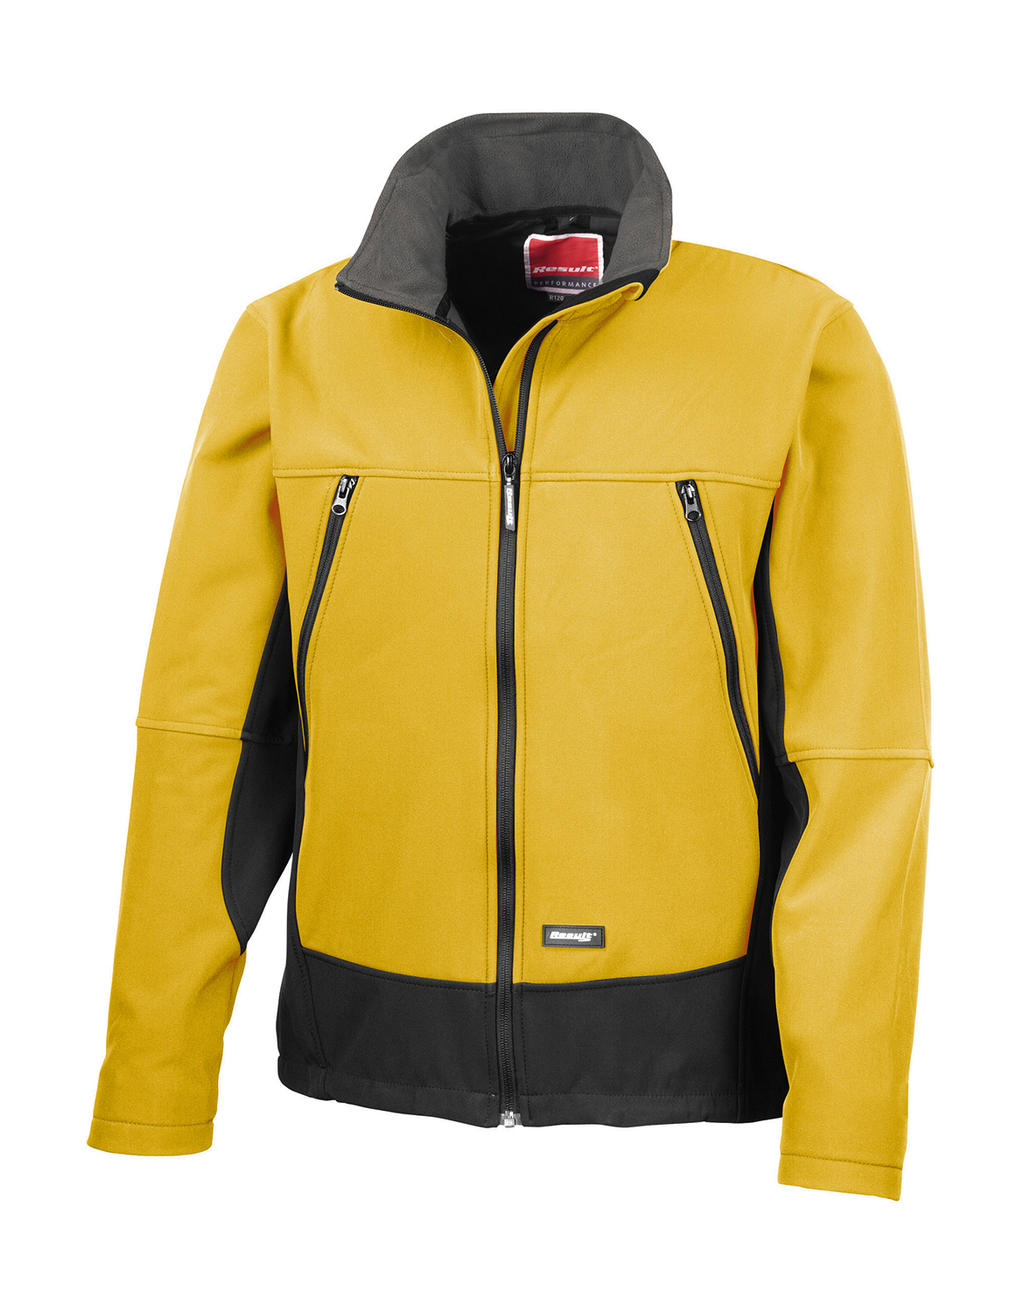  Softshell Activity Jacket in Farbe Sport Yellow/Black